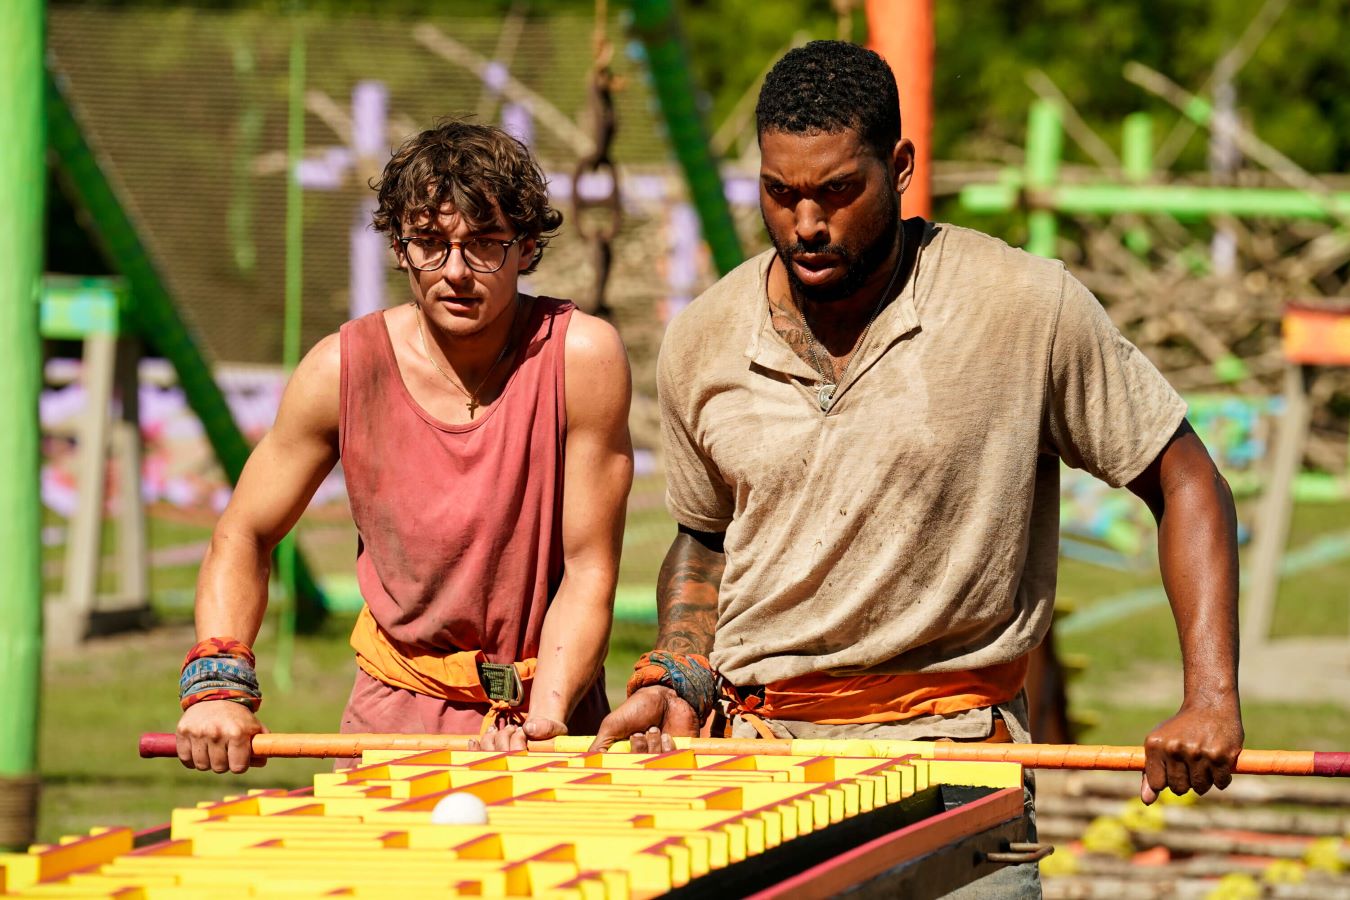 Carson Garrett and Brandon Cottom compete in an Immunity Challenge in 'Survivor 44' on CBS. Carson wears a pink tank top. Brandon wears a light beige long-sleeved shirt.